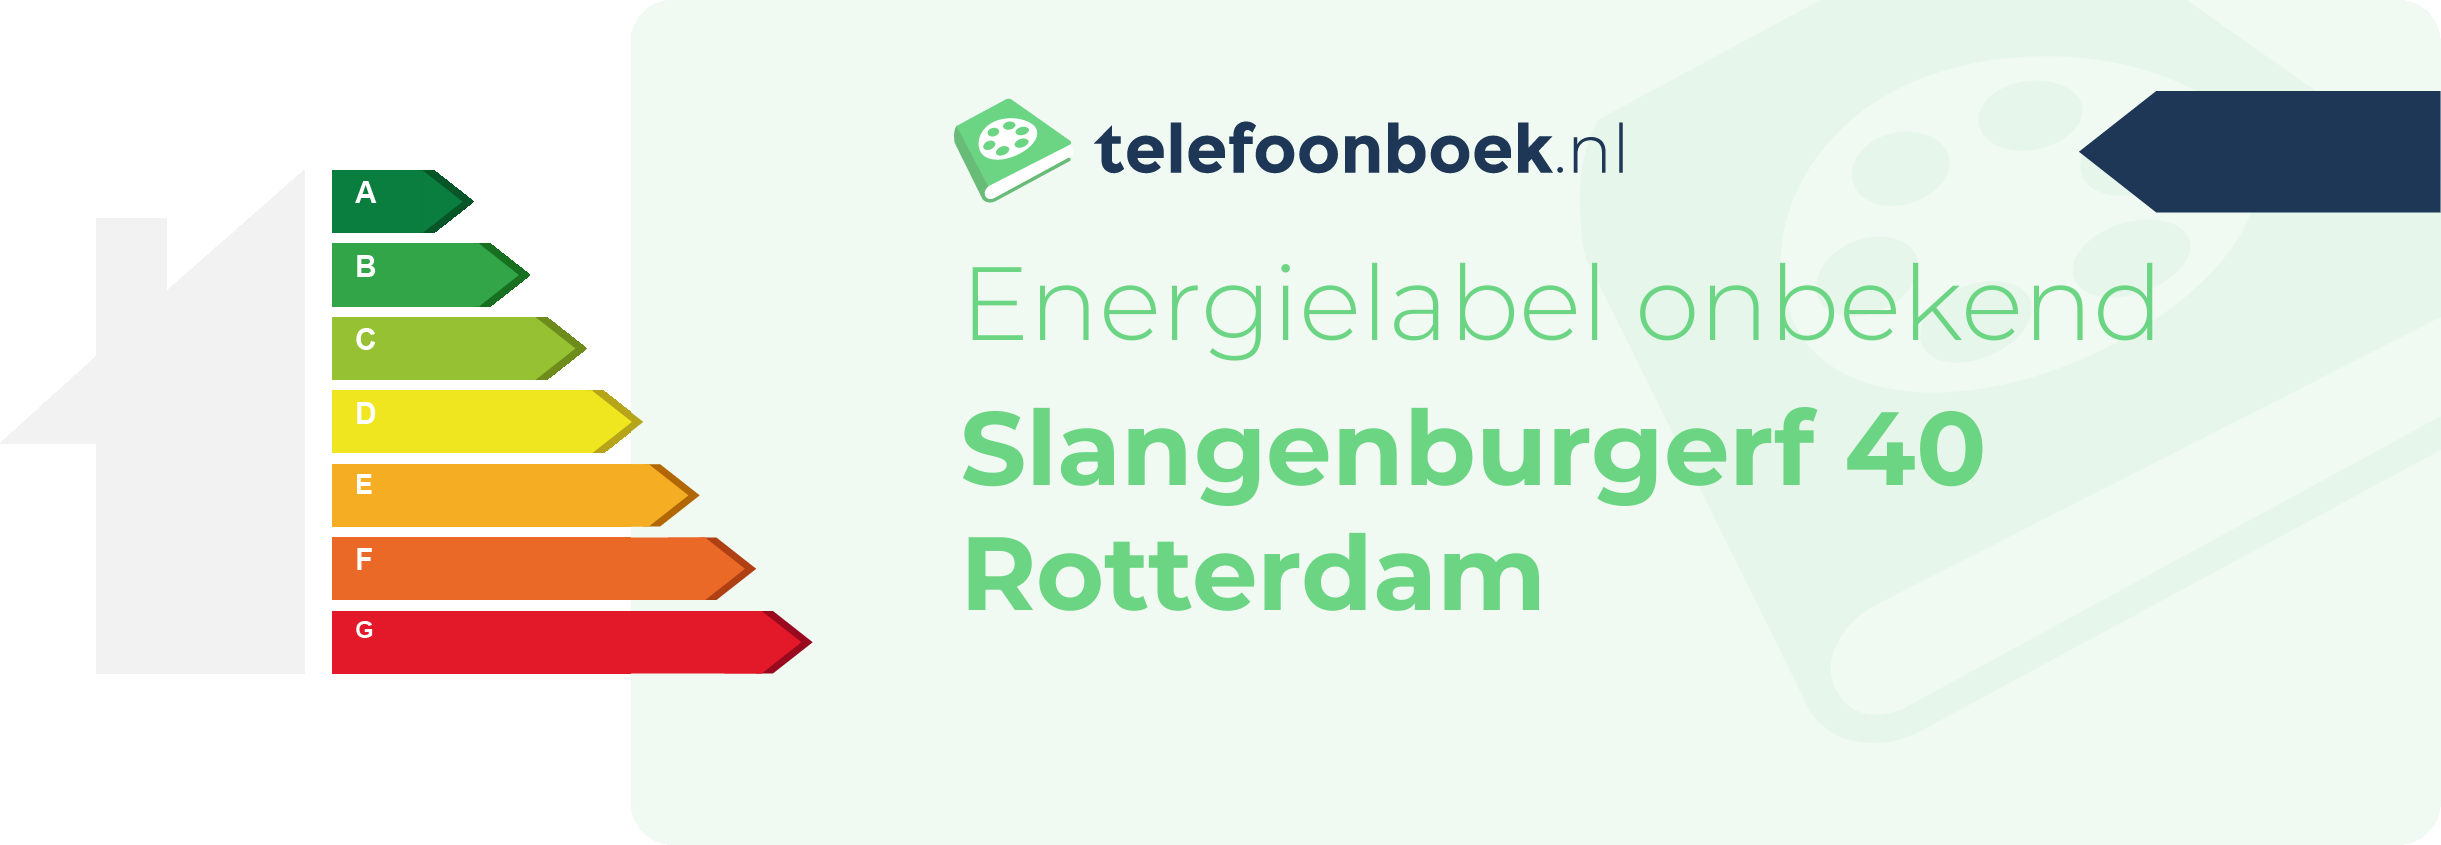 Energielabel Slangenburgerf 40 Rotterdam